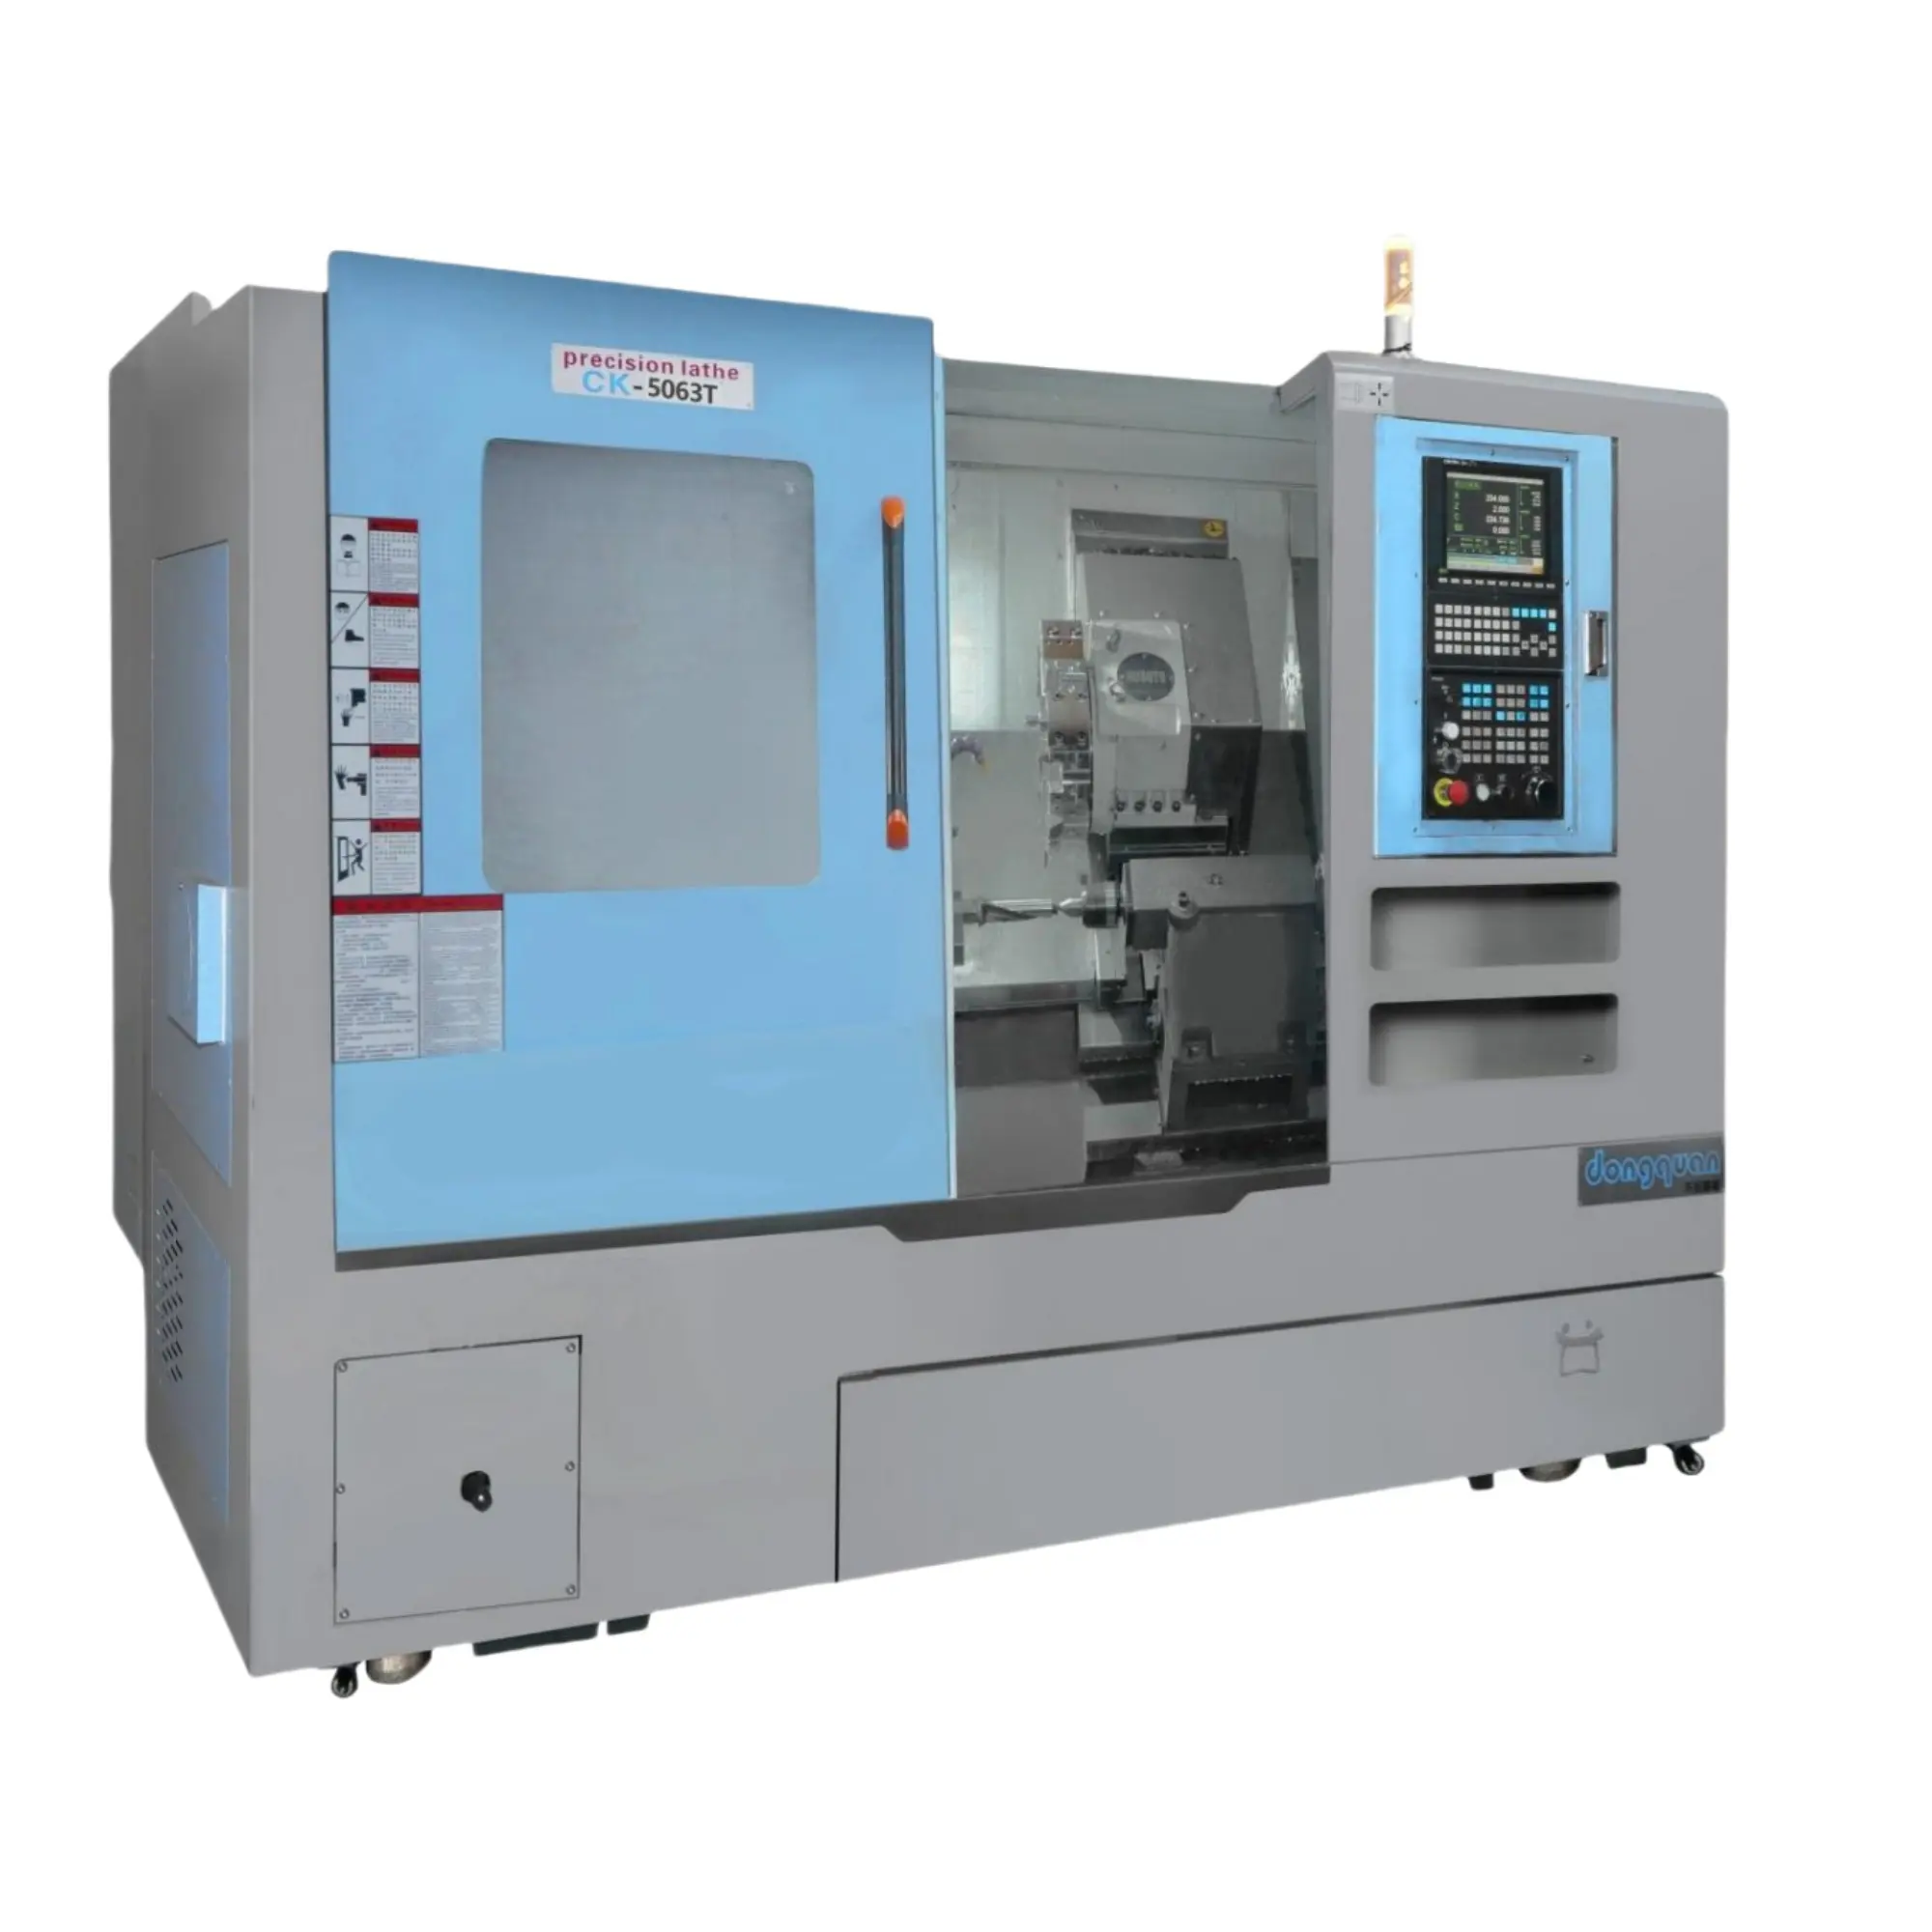 PRECISION CK-5063T ali top cnc lathe Mini CNC Lathe Machine torno metal smart cnc lathe